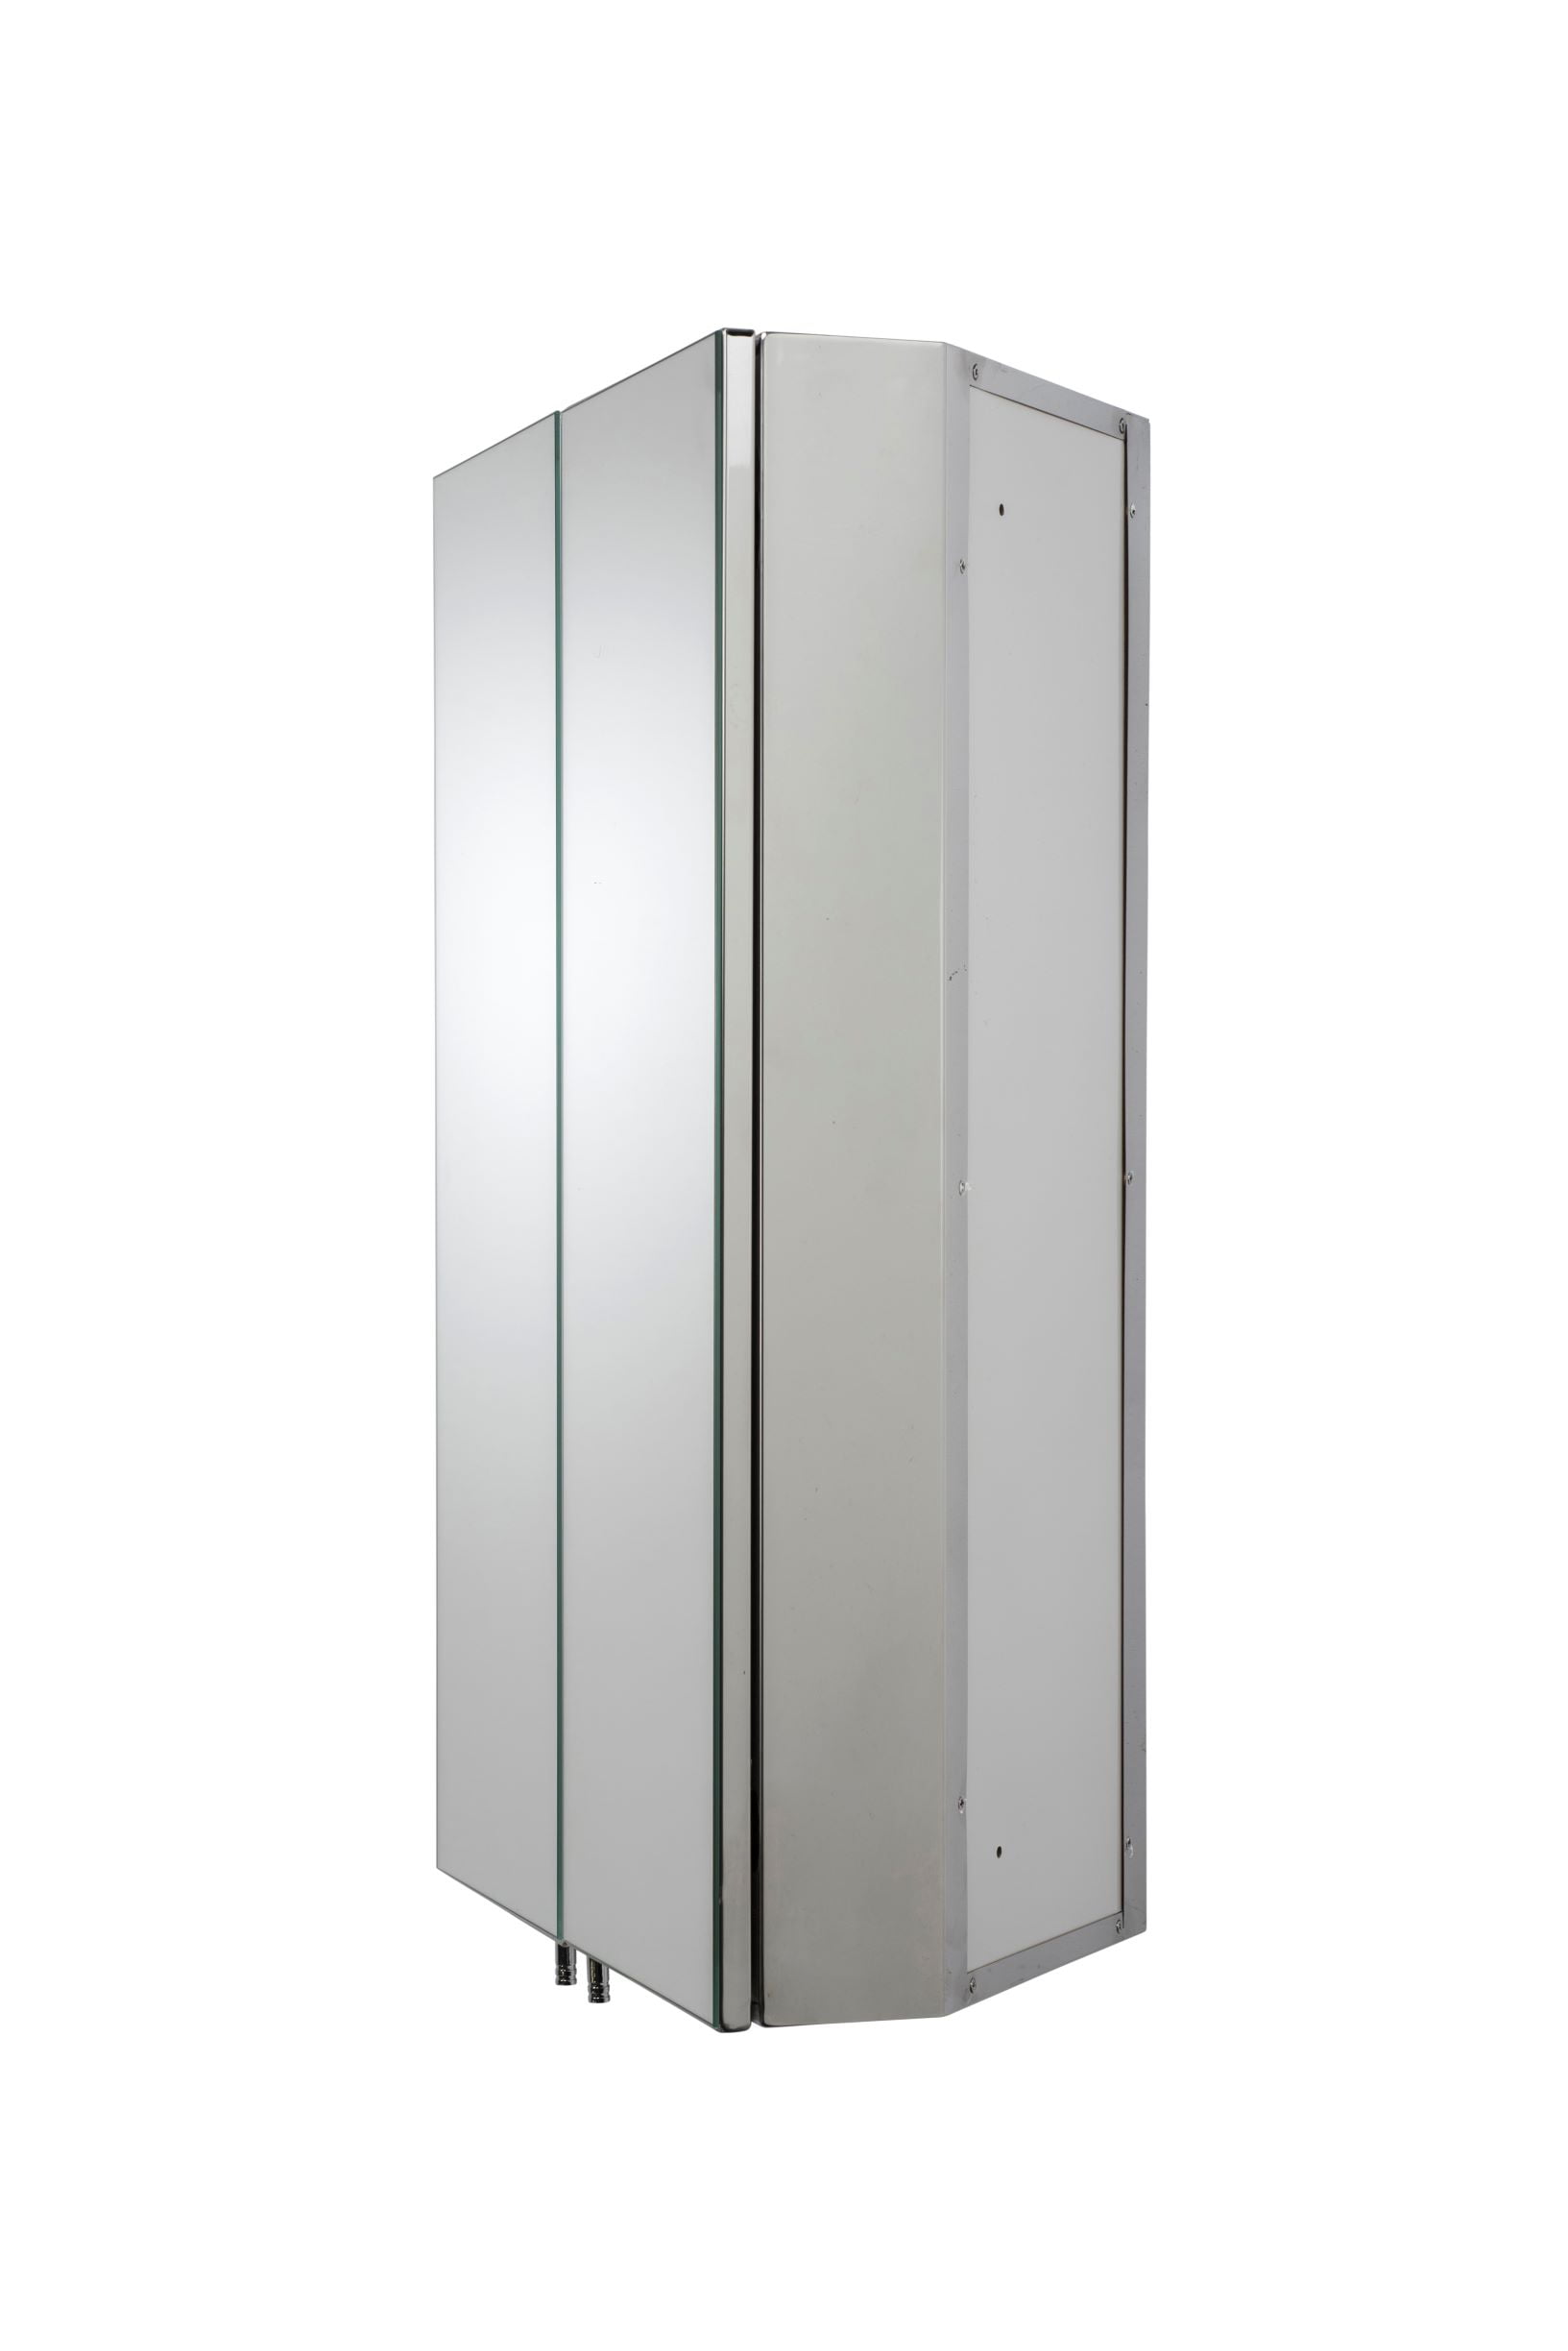 Croydex Avisio Corner Mirror Cabinet Double Door Stainless Steel Modern WC766105 